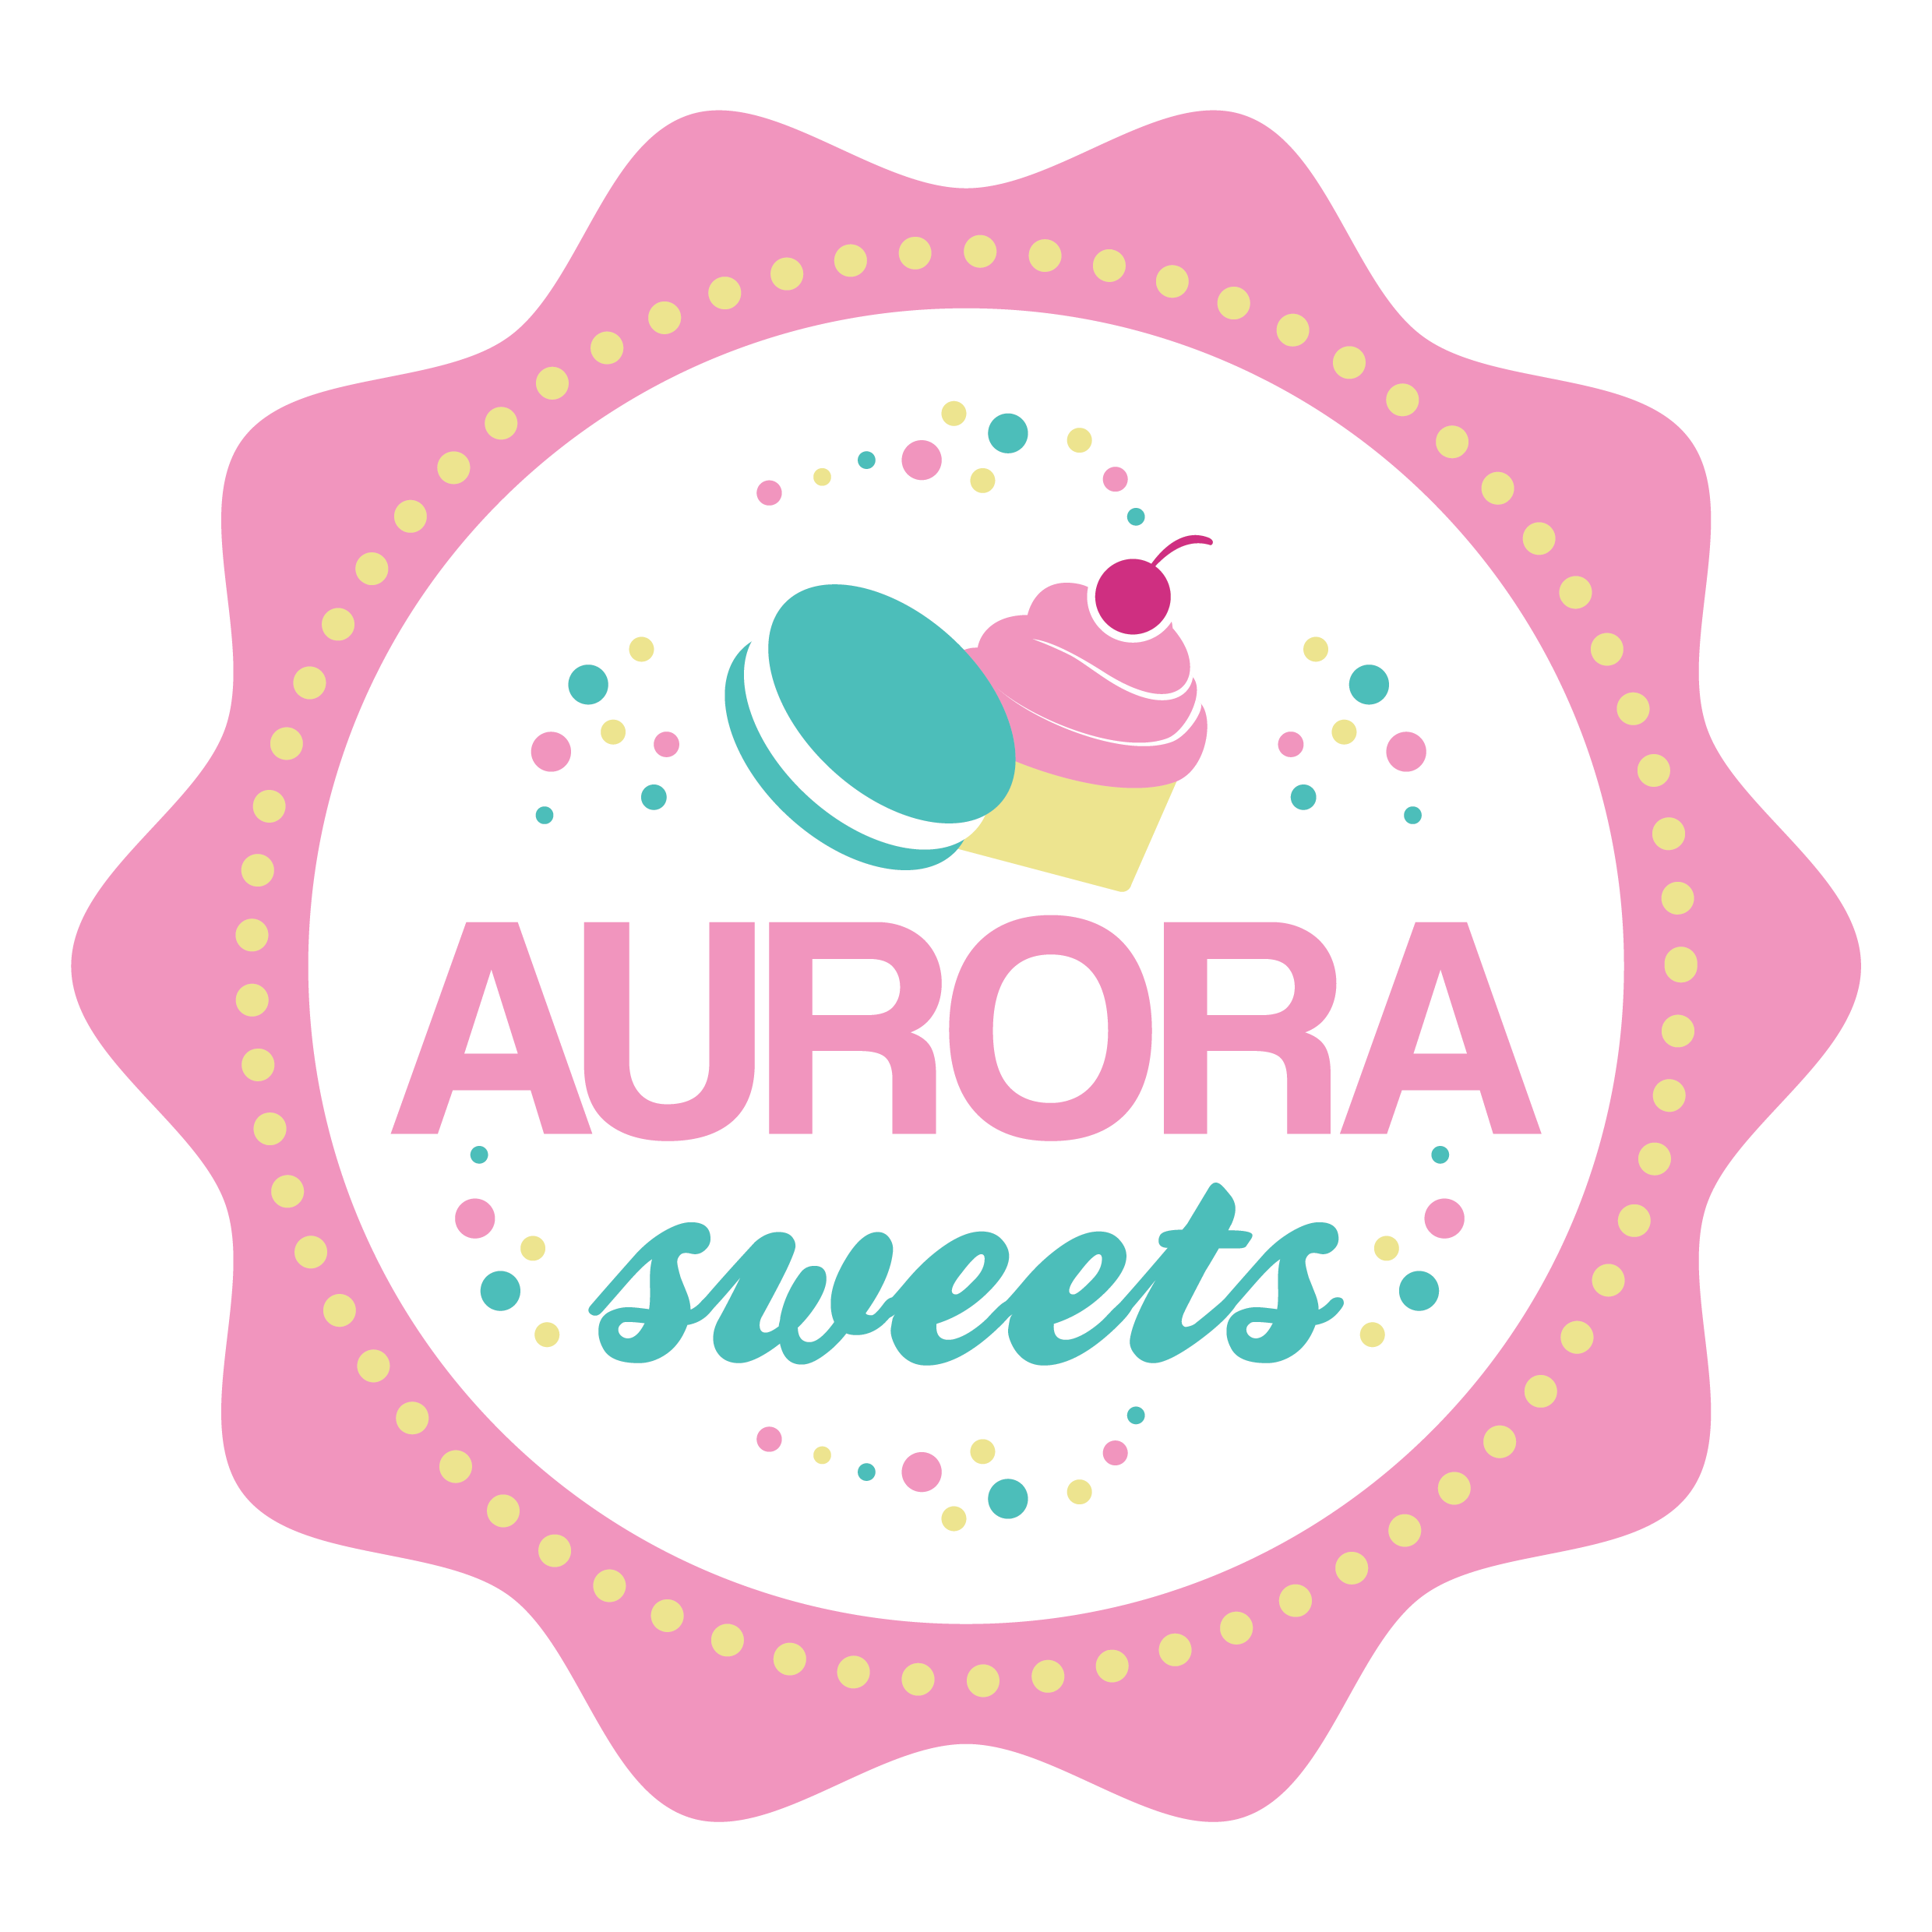 Aurora sweets